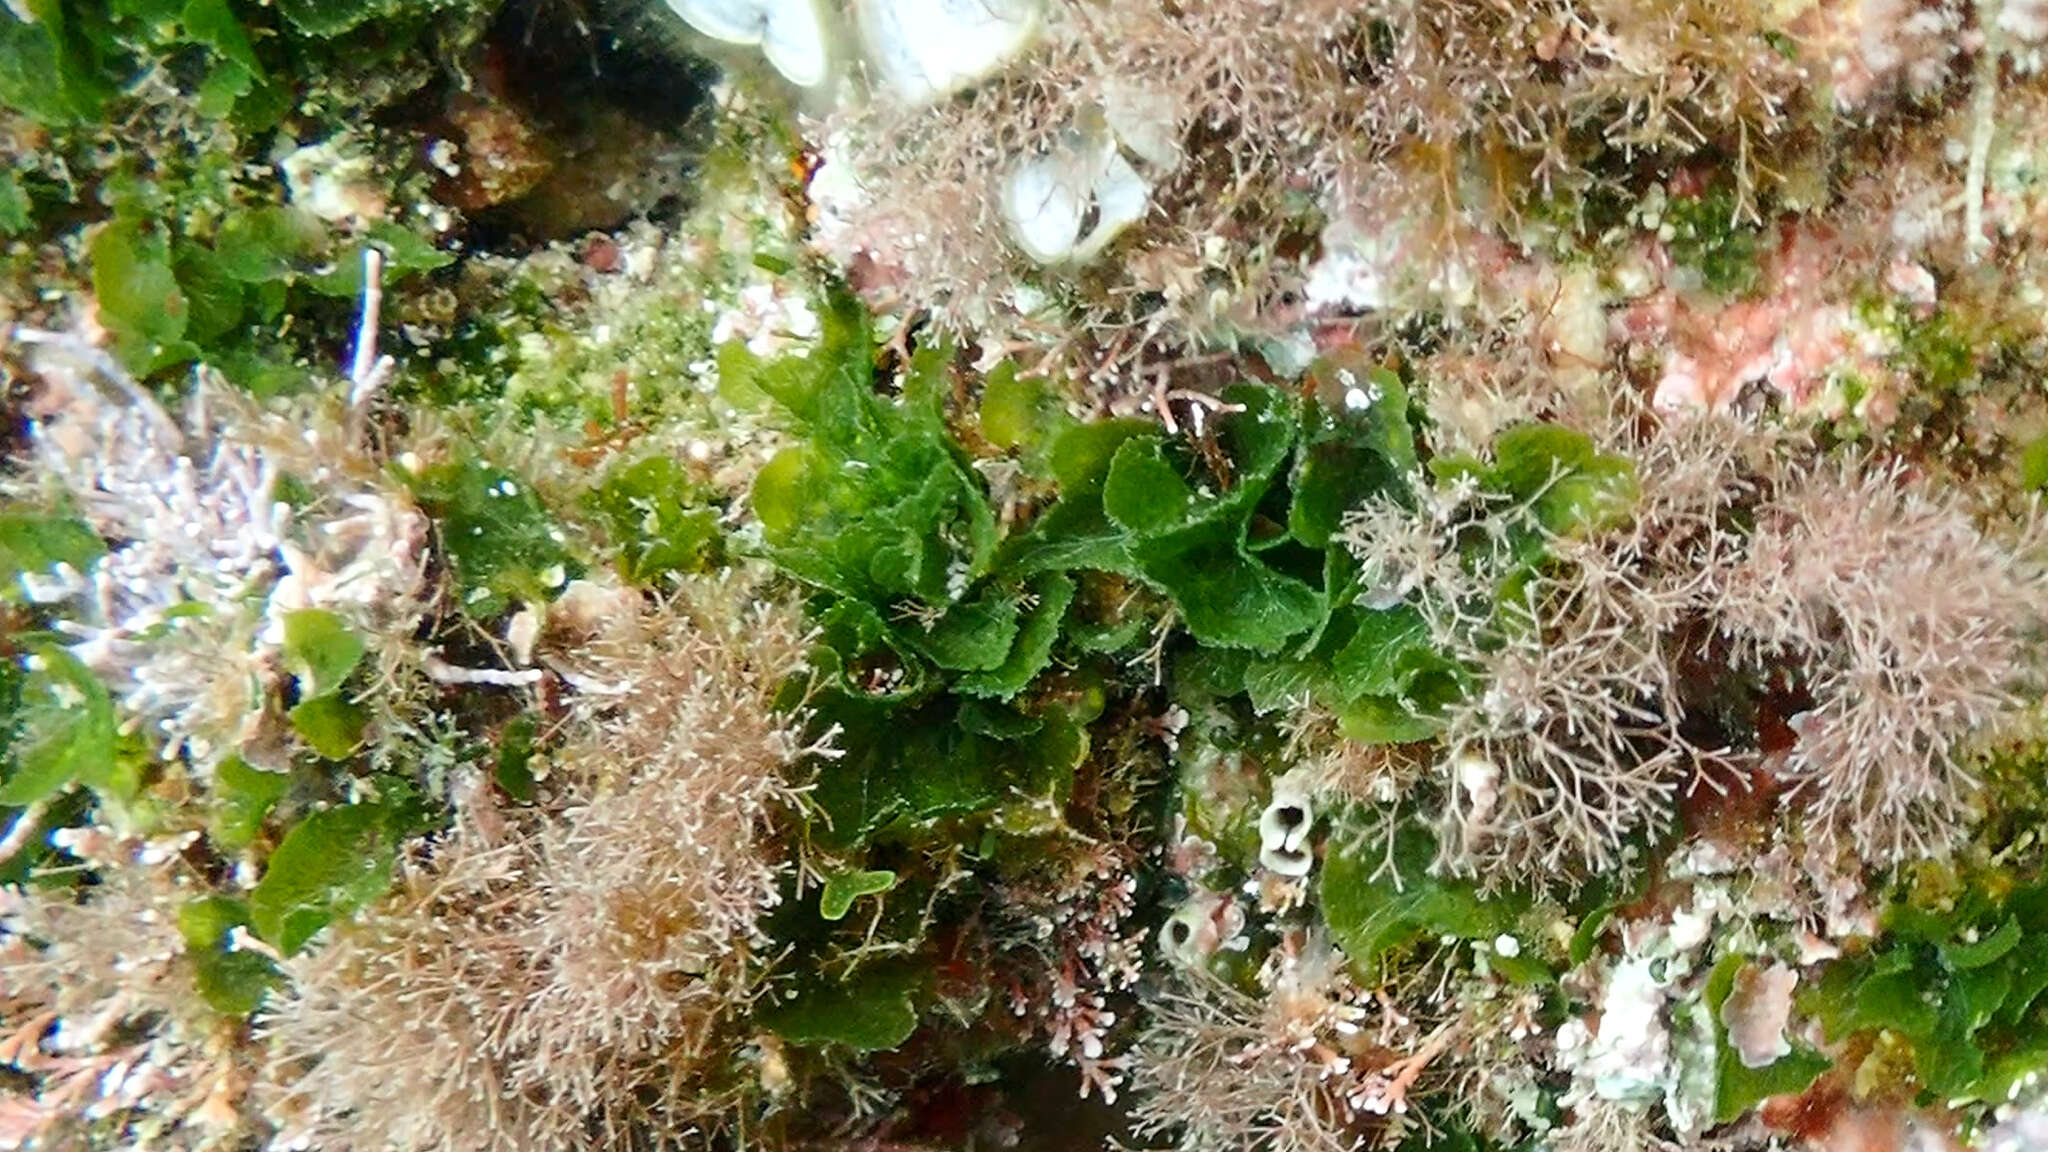 Image of Anadyomene stellata